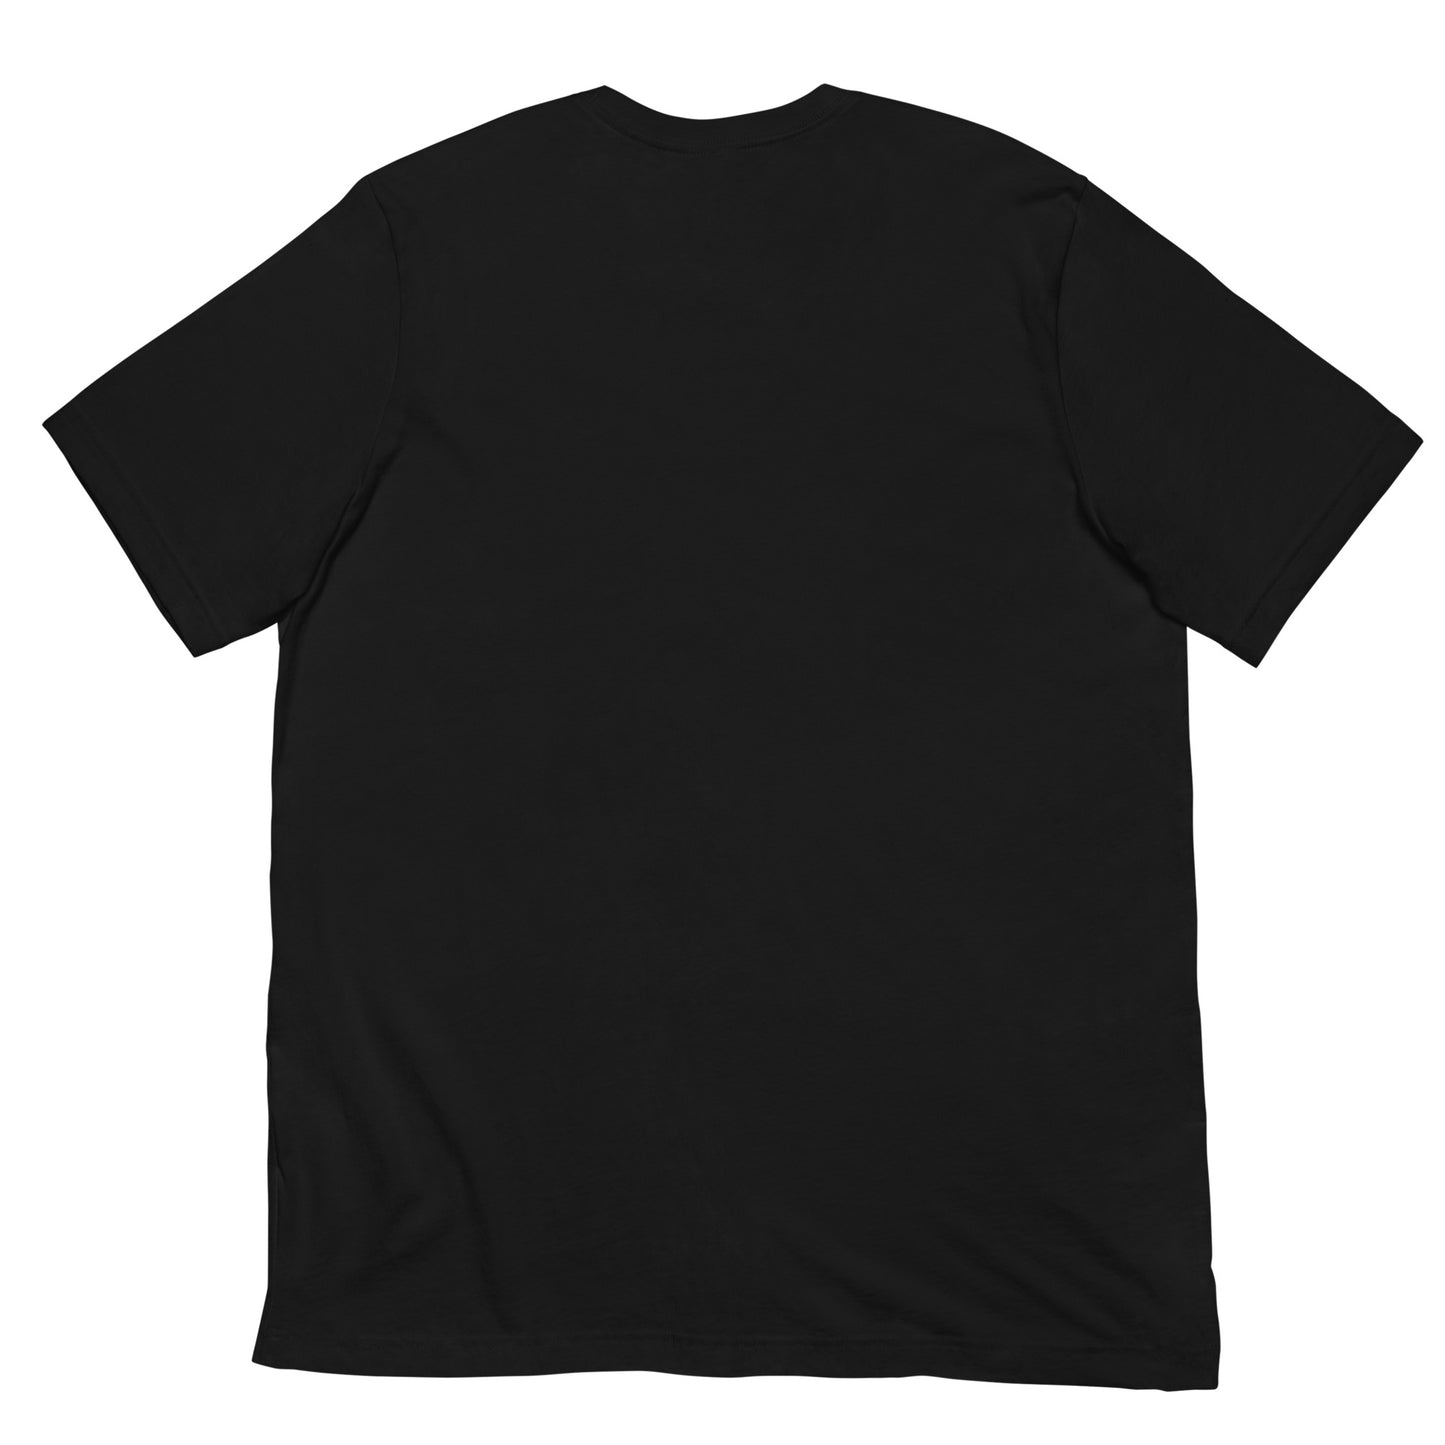 212 Dots - Unisex t-shirt